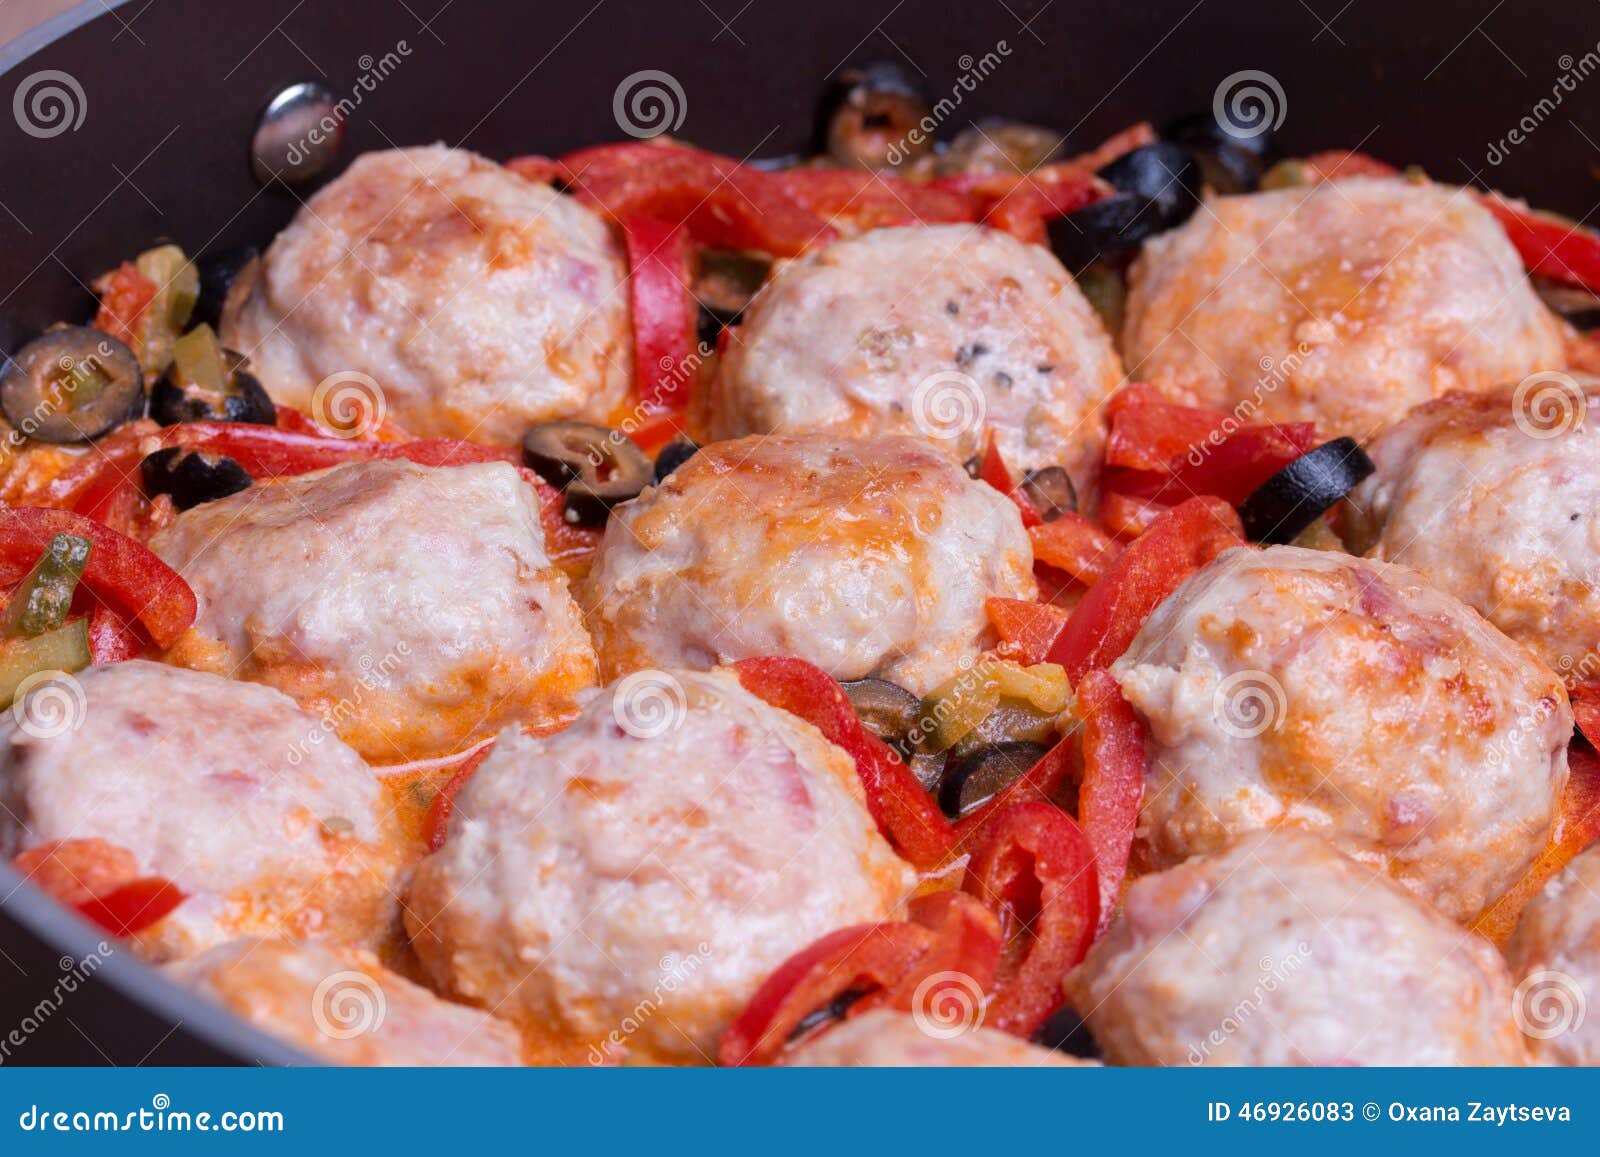 spanish meatballs albondigas with vegetables